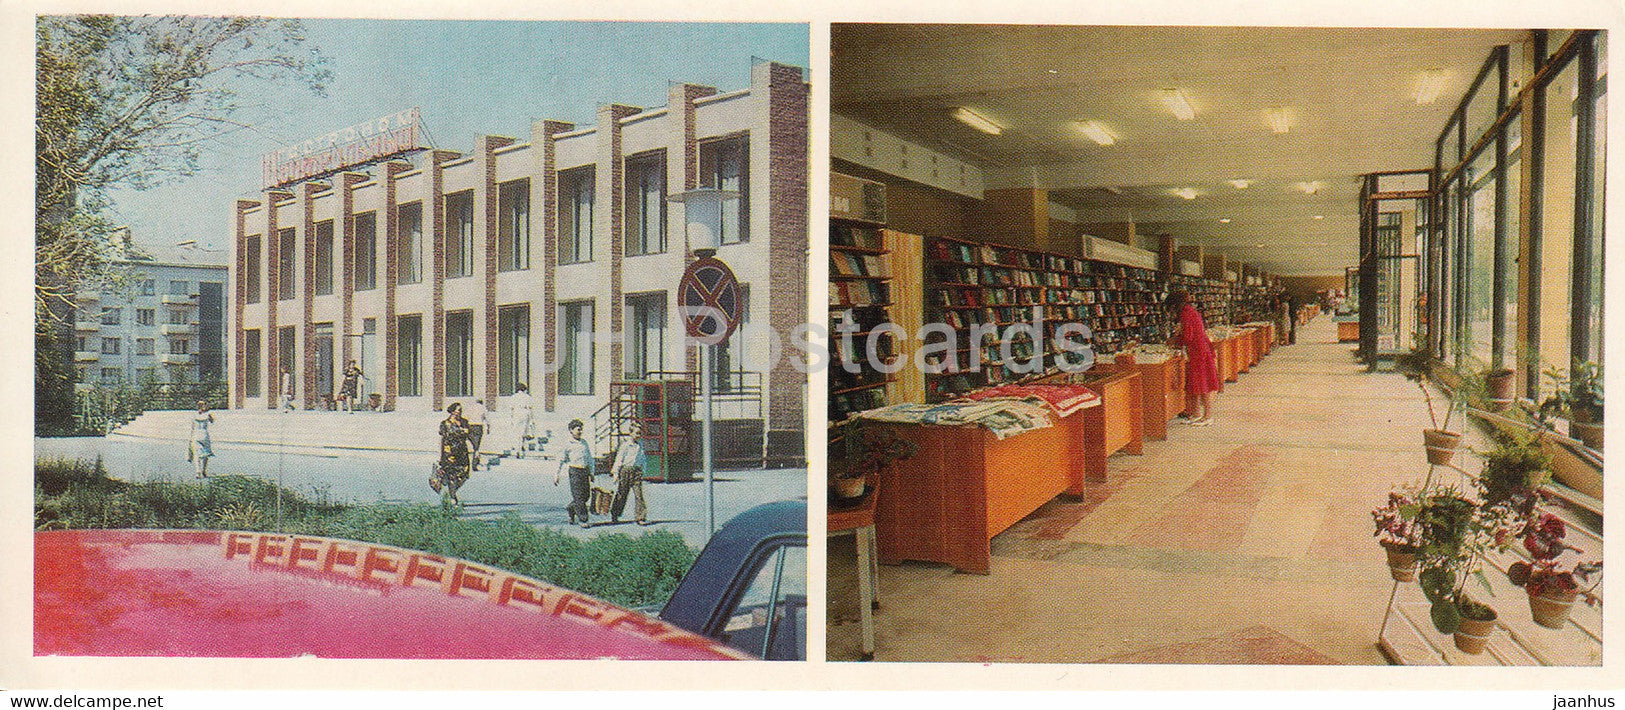 Kostanay - Deli Tsentralnyi - The Book Store - 1985 - Kazakhstan USSR - unused - JH Postcards